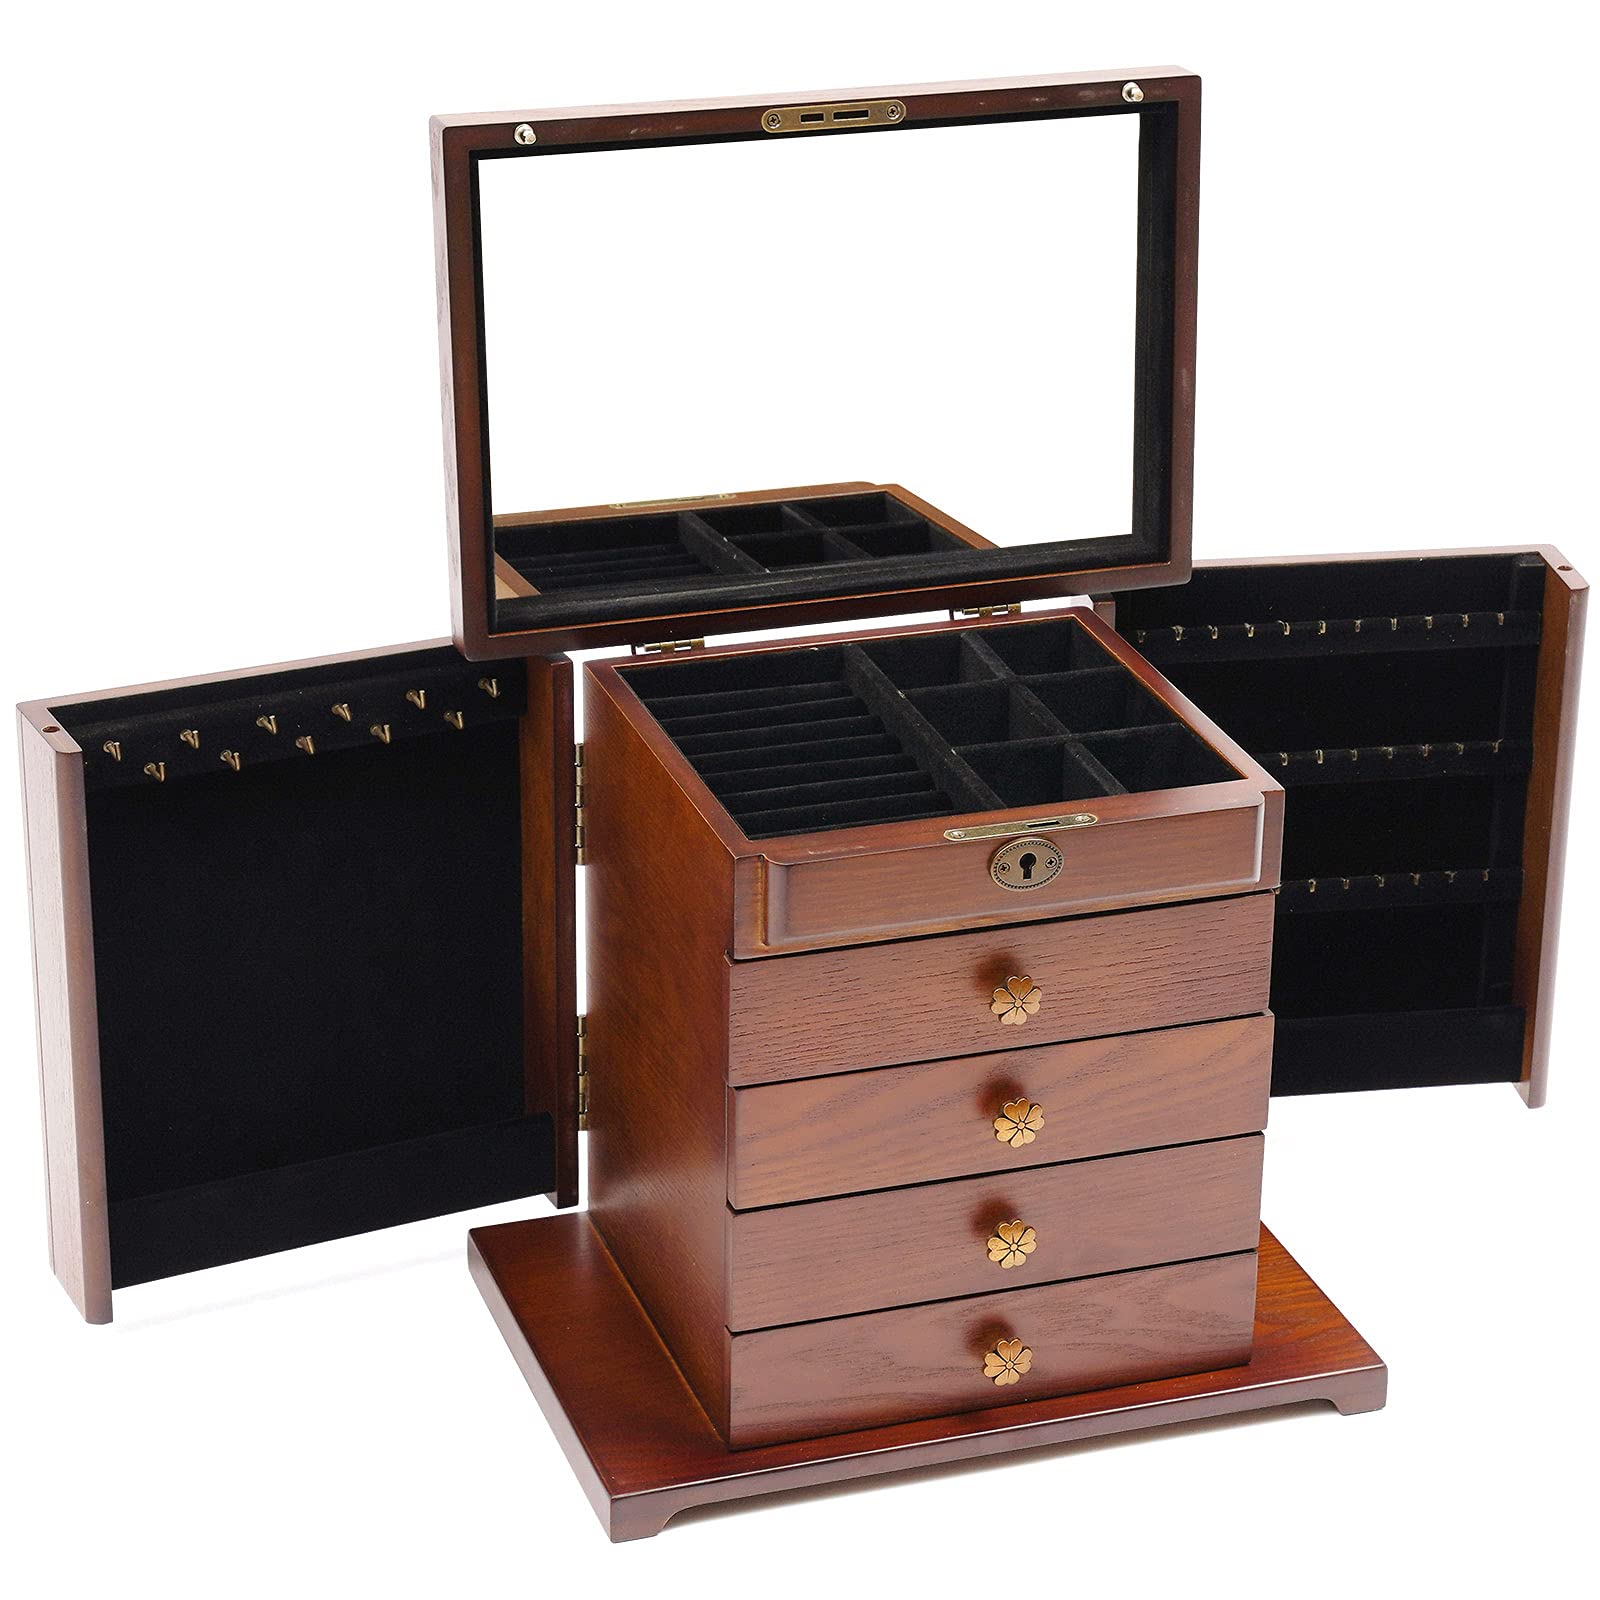 5 Layer Wooden Jewelry Storage Box